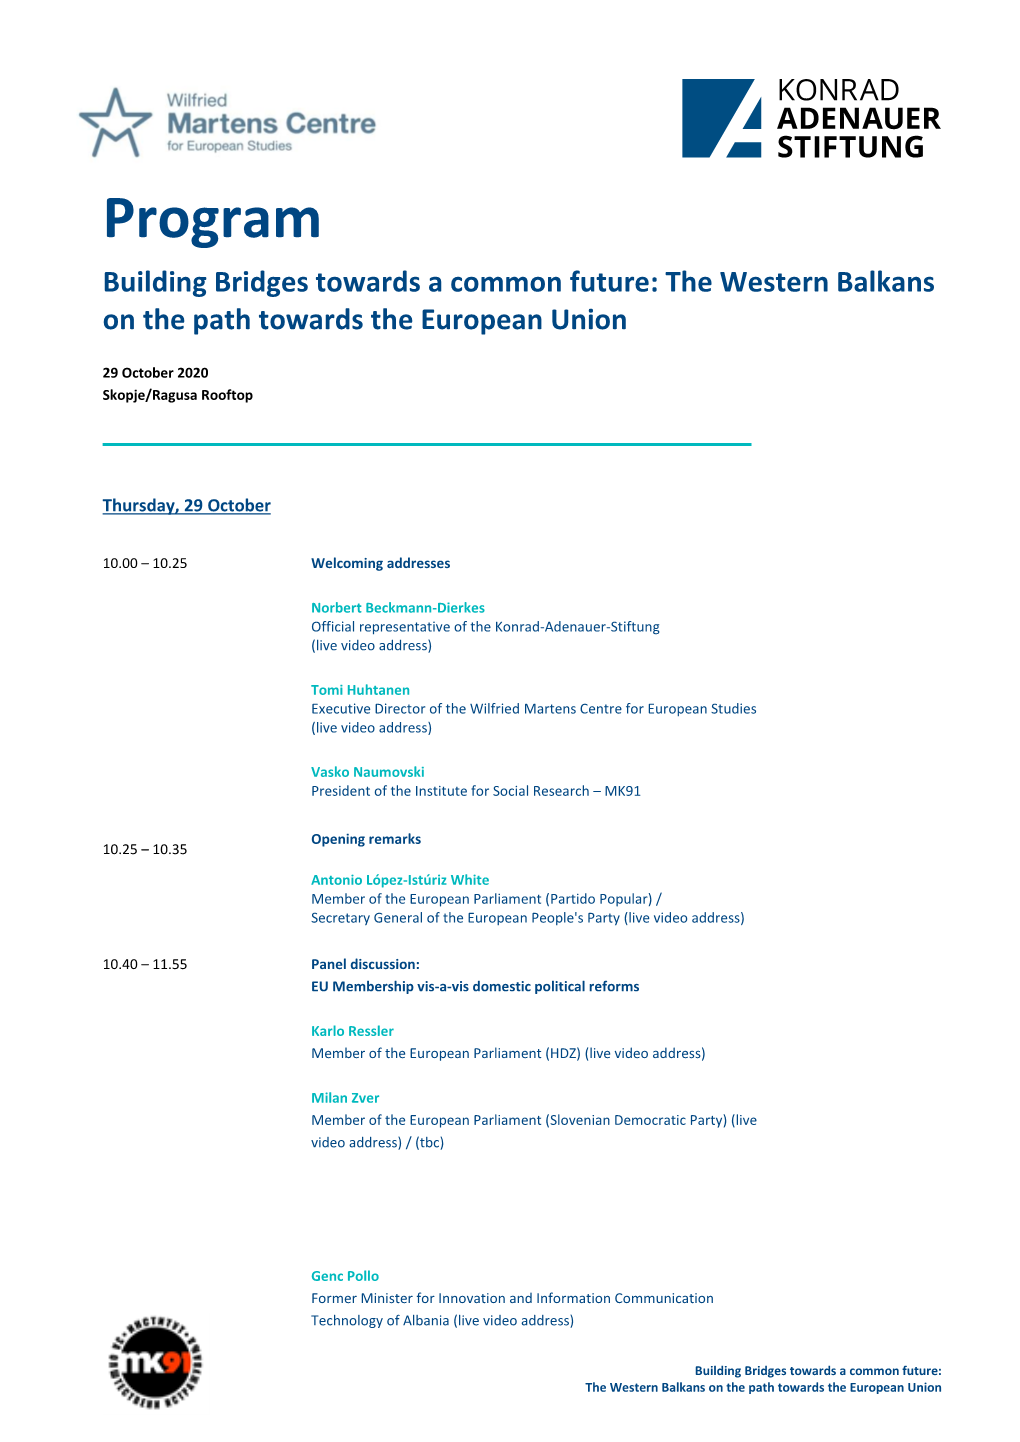 Program Building Bridges Towards А Common Future: the Western Balkans on the Path Towards the European Union